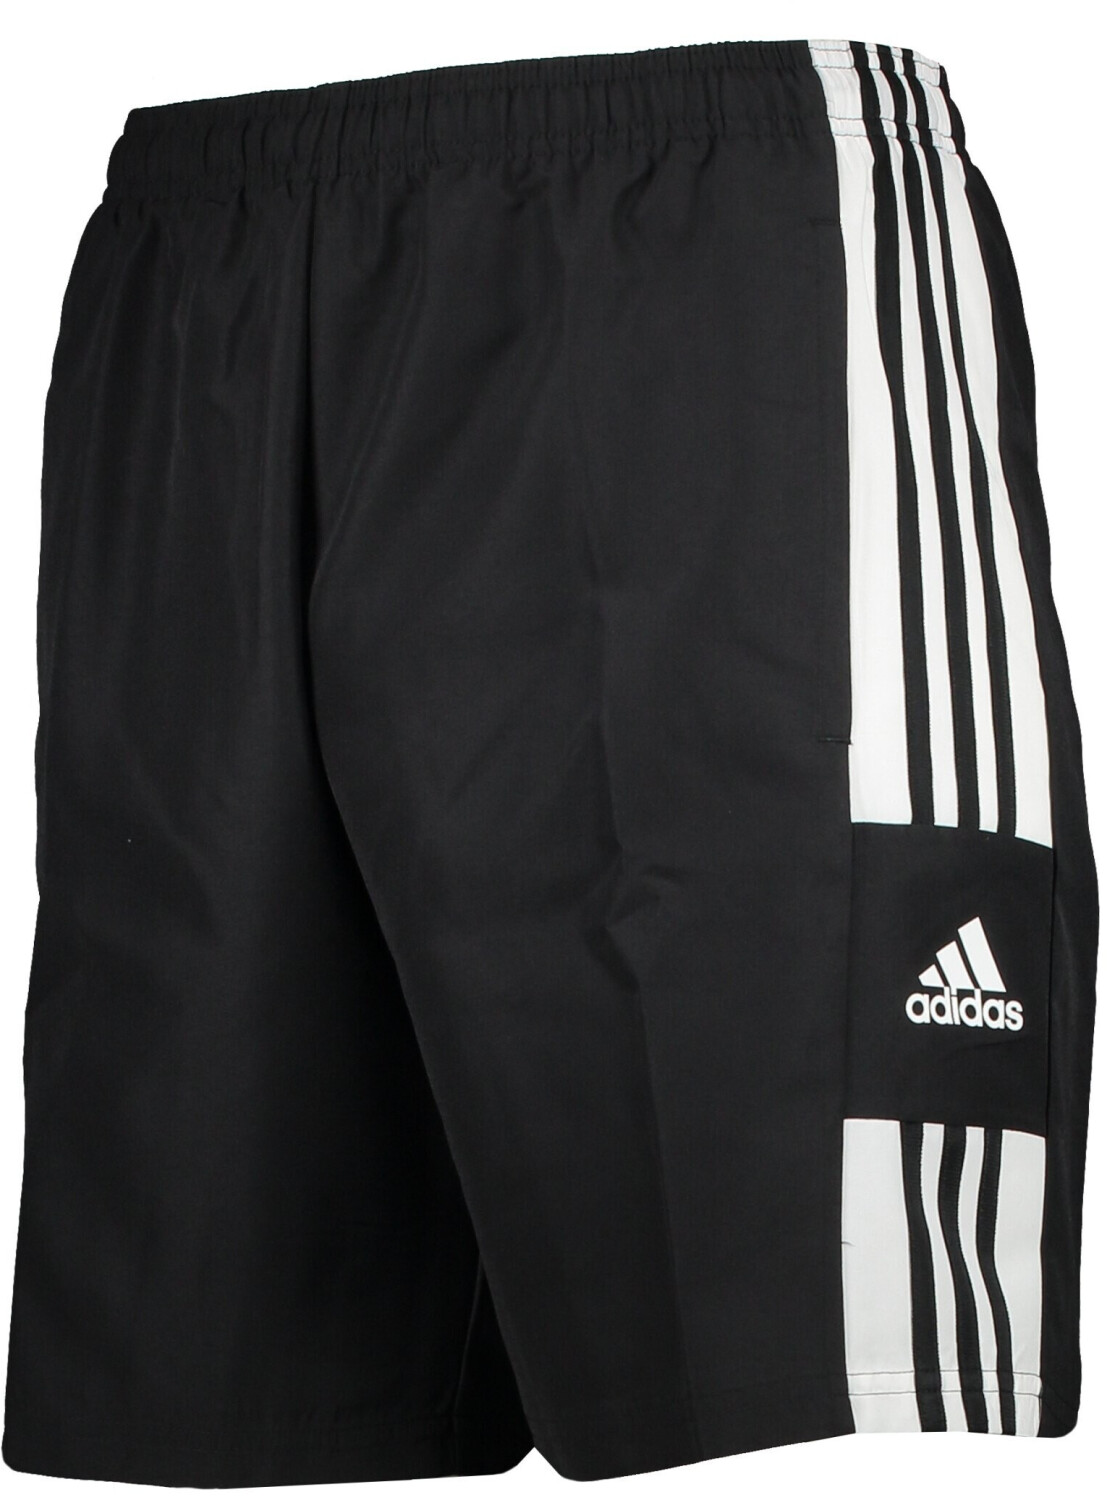 Image of Adidas Squadra 21 Downtime Woven Shorts black (GK9557)